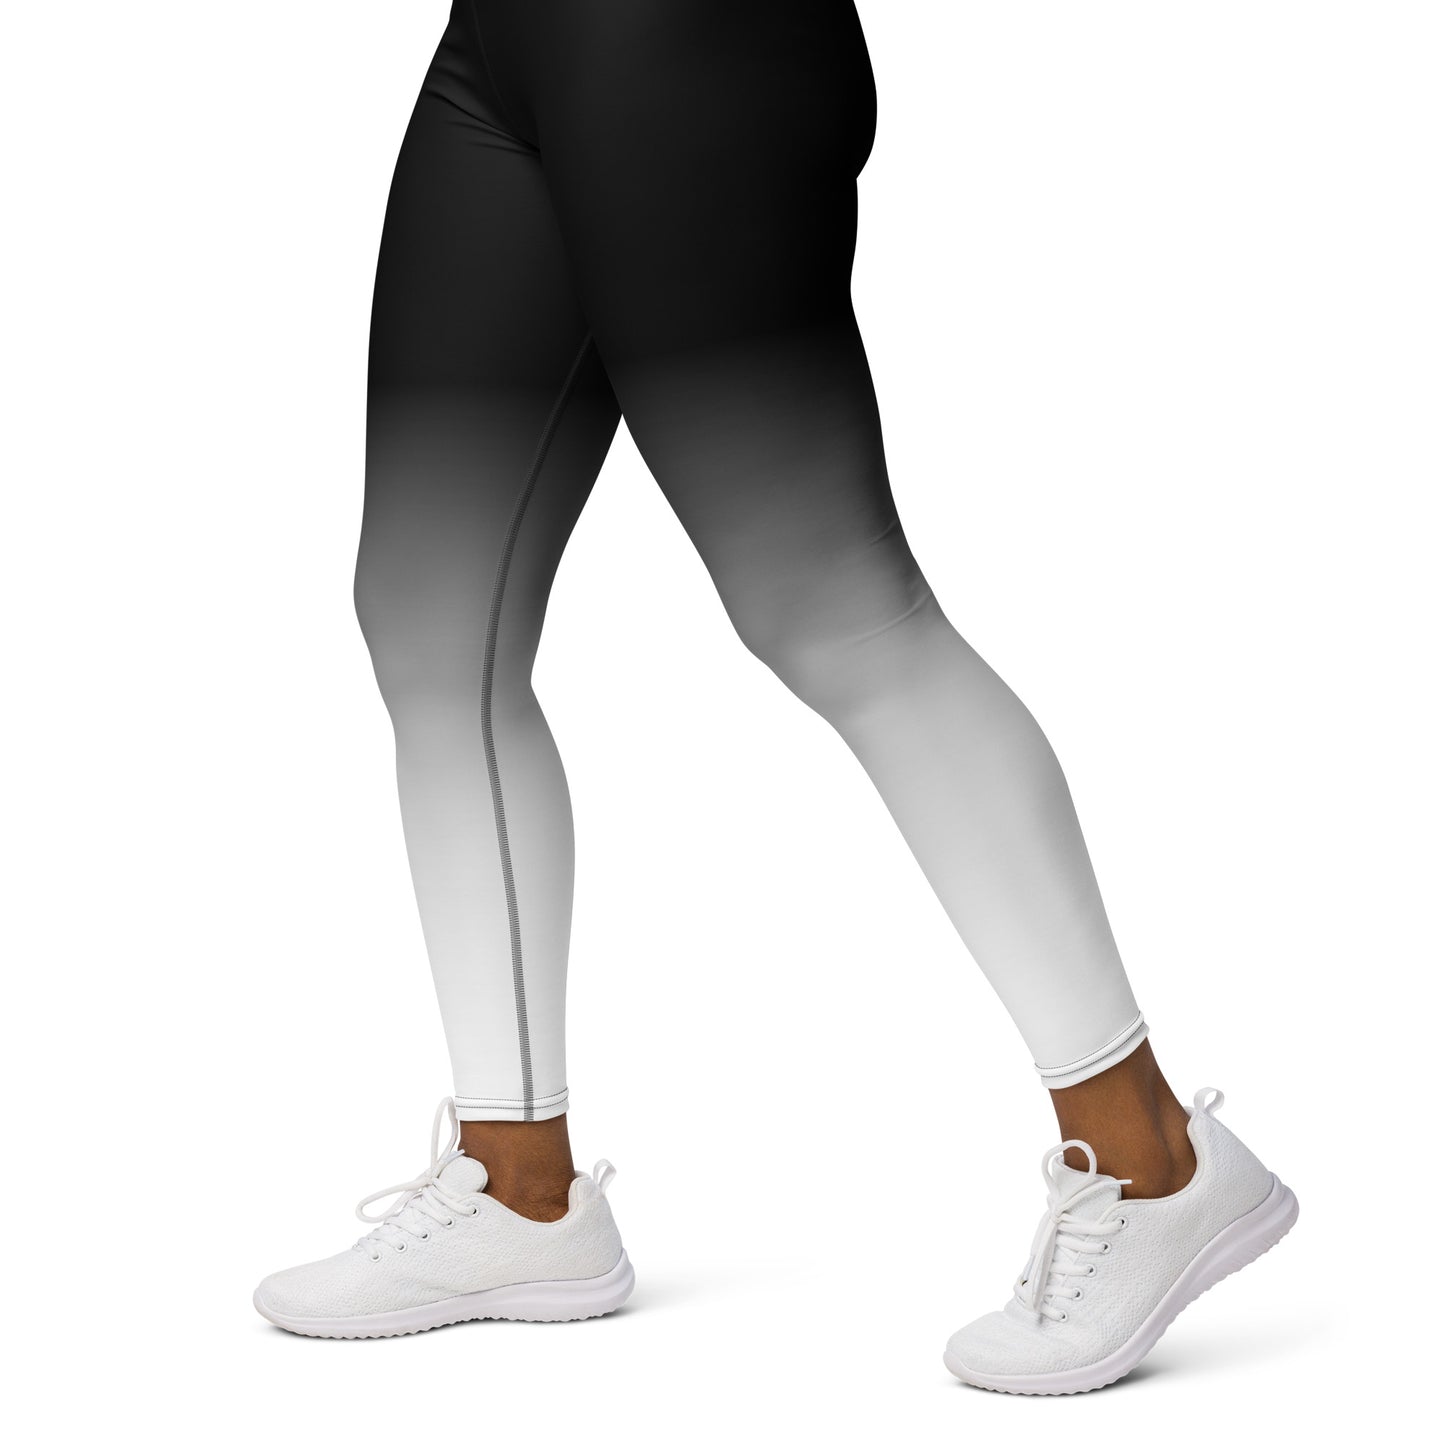 Women's Sports Leggings with Pockets, White Black Gradient